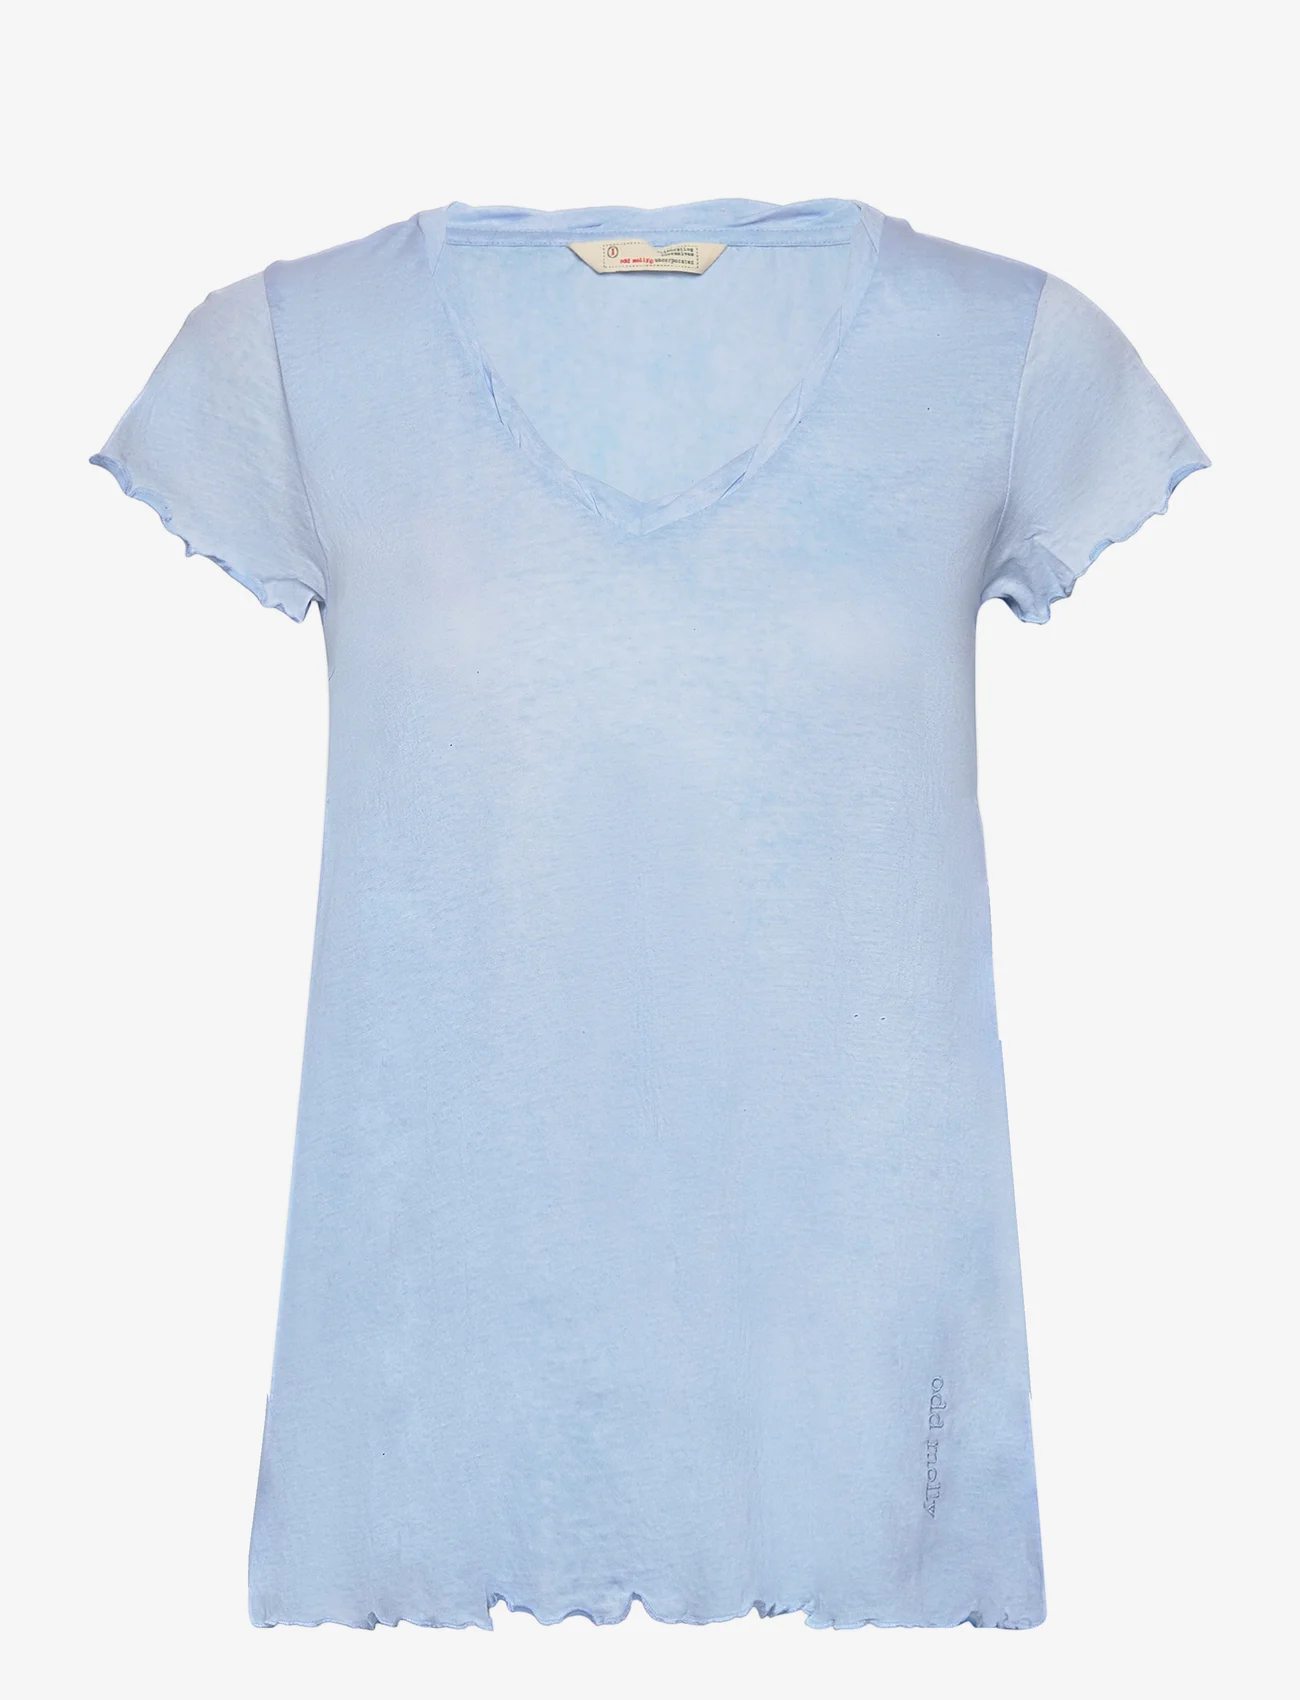 ODD MOLLY - Carole Top - t-shirt & tops - blue cloud - 0